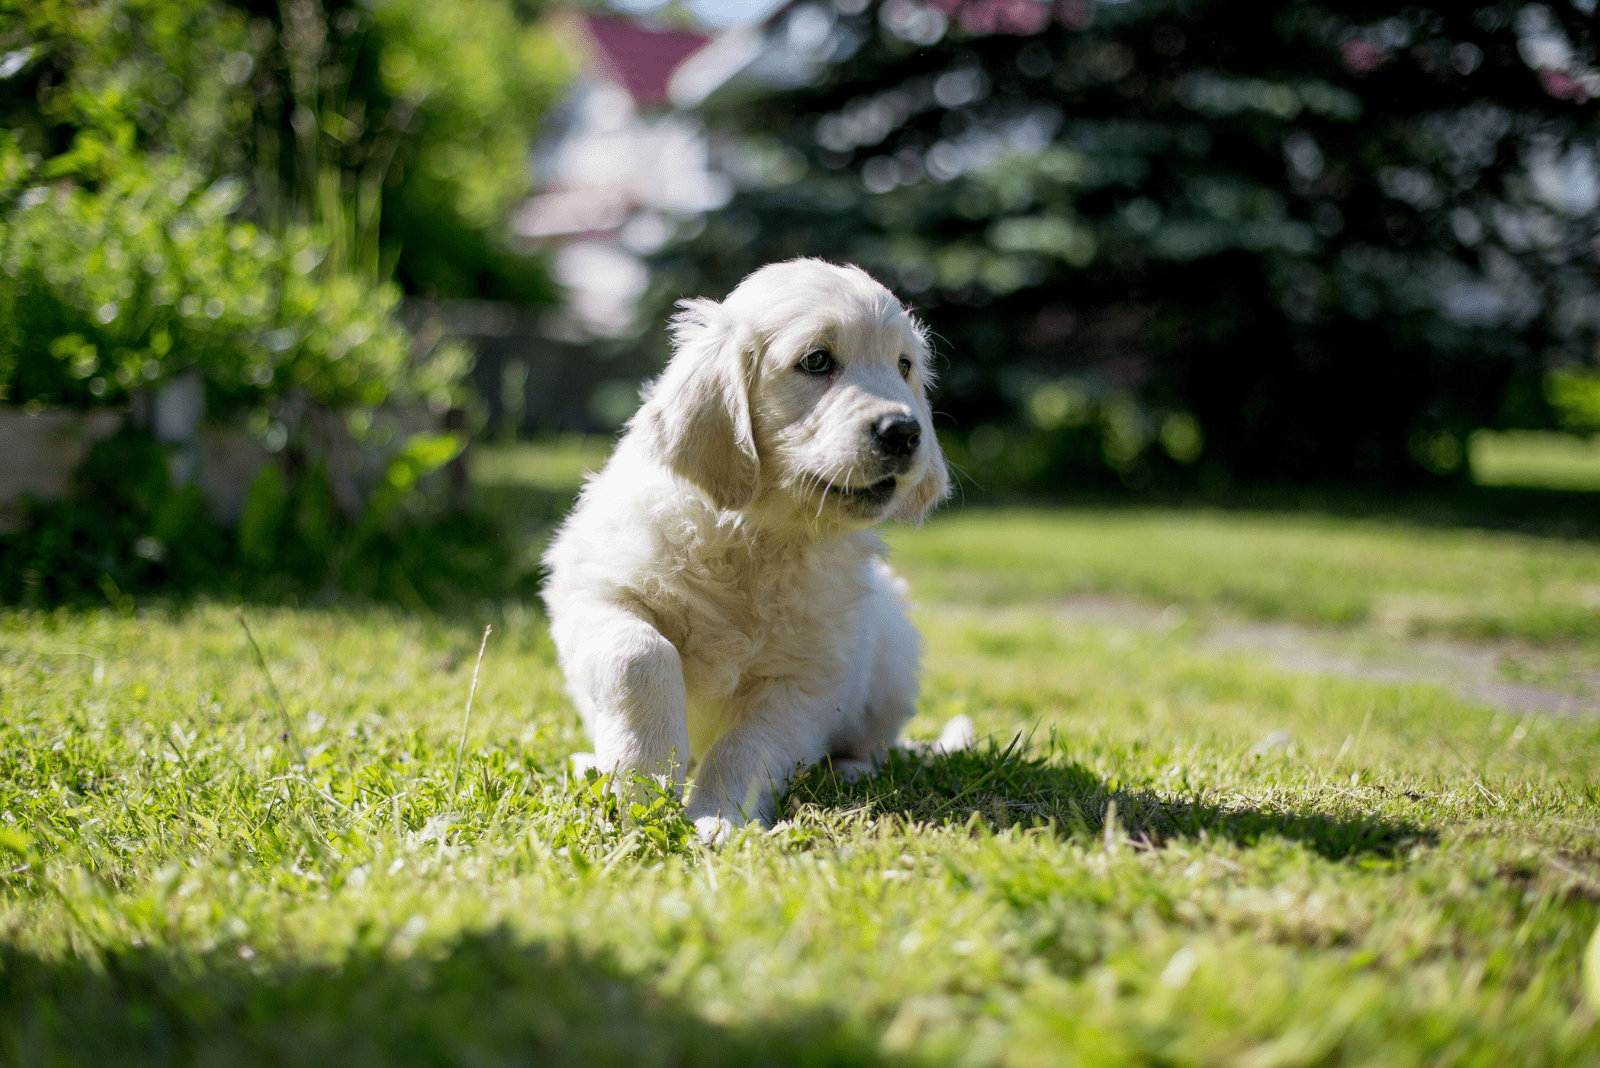 A Golden Retriever puppy is standing in the garden